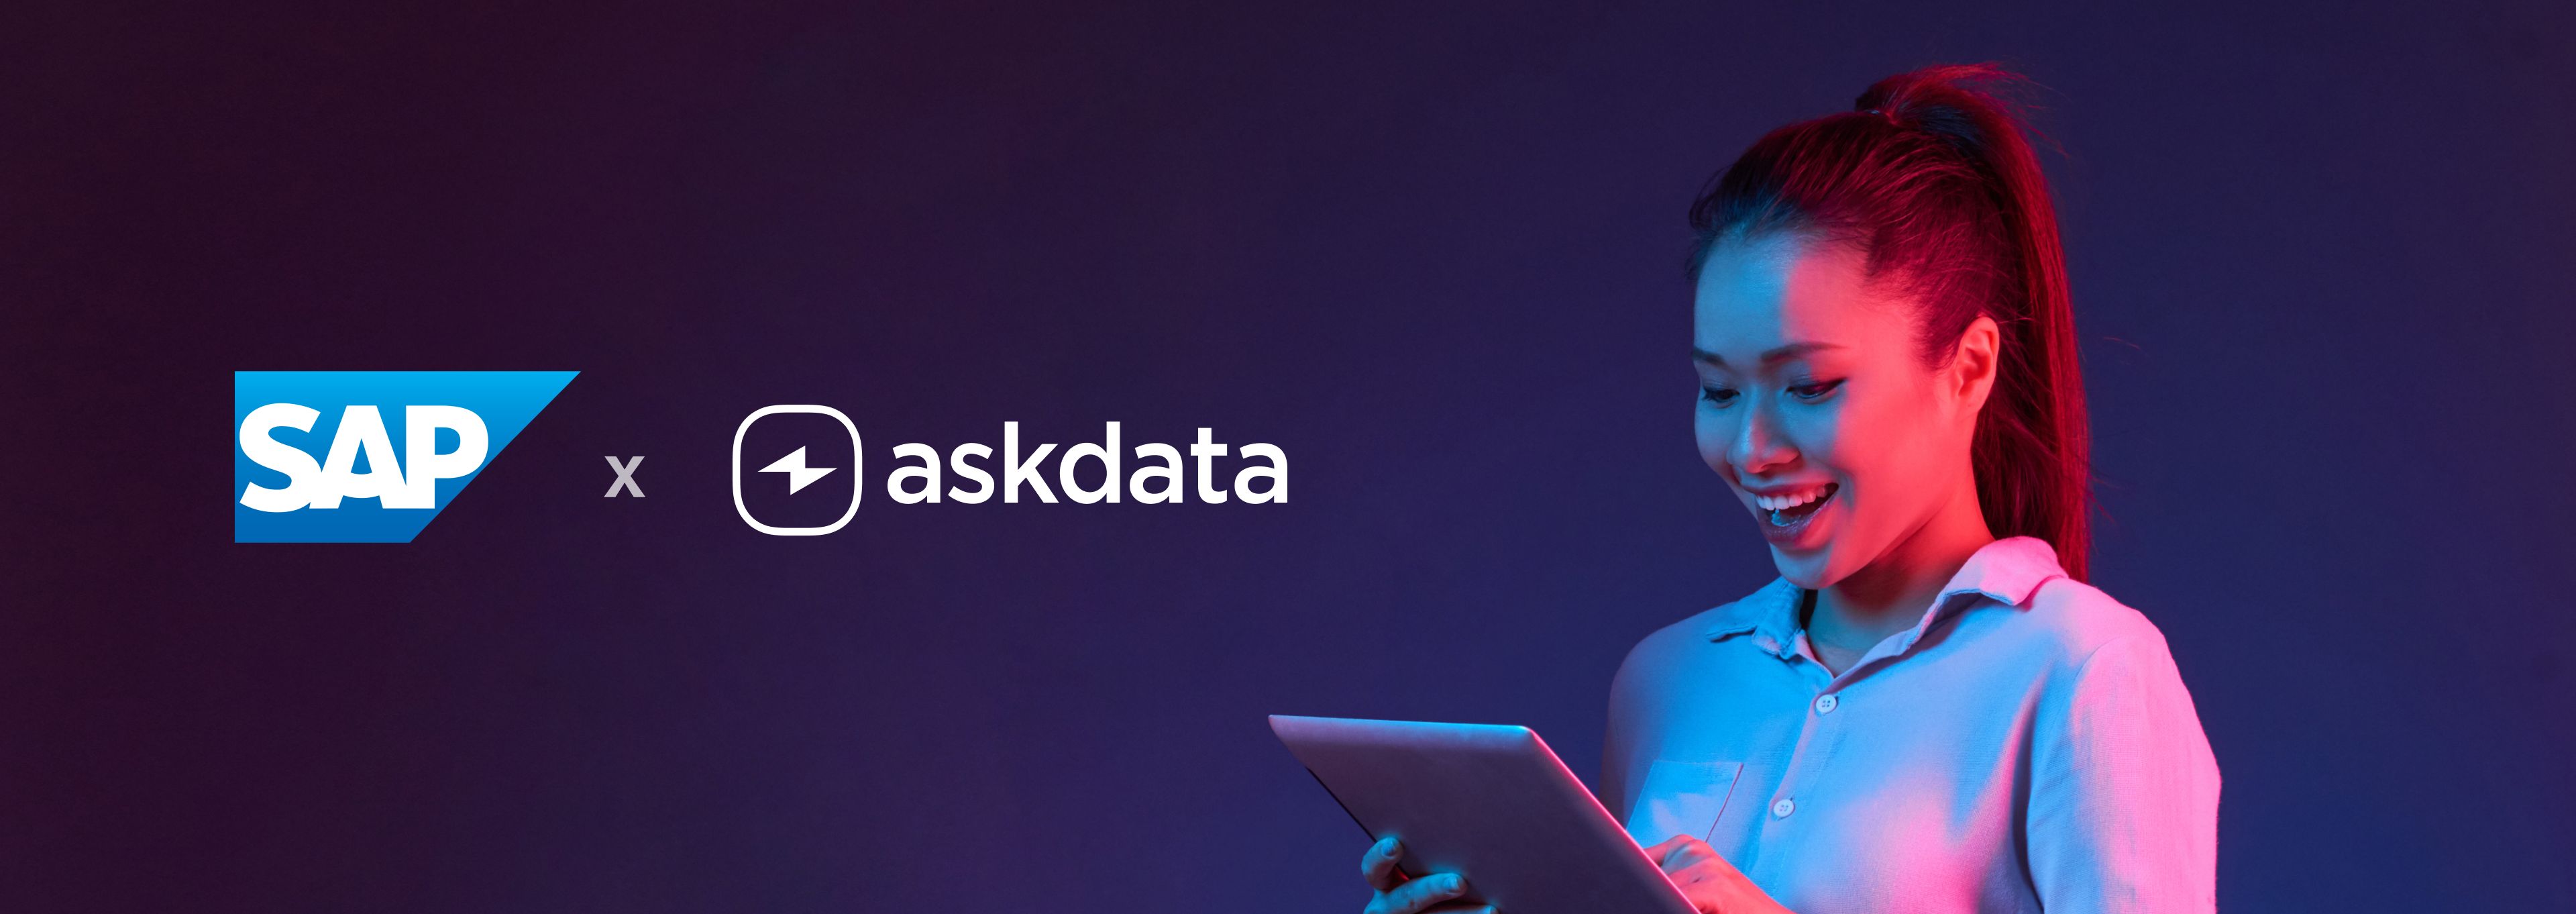 Askdata si unisce alla famiglia SAP Analytics Cloud